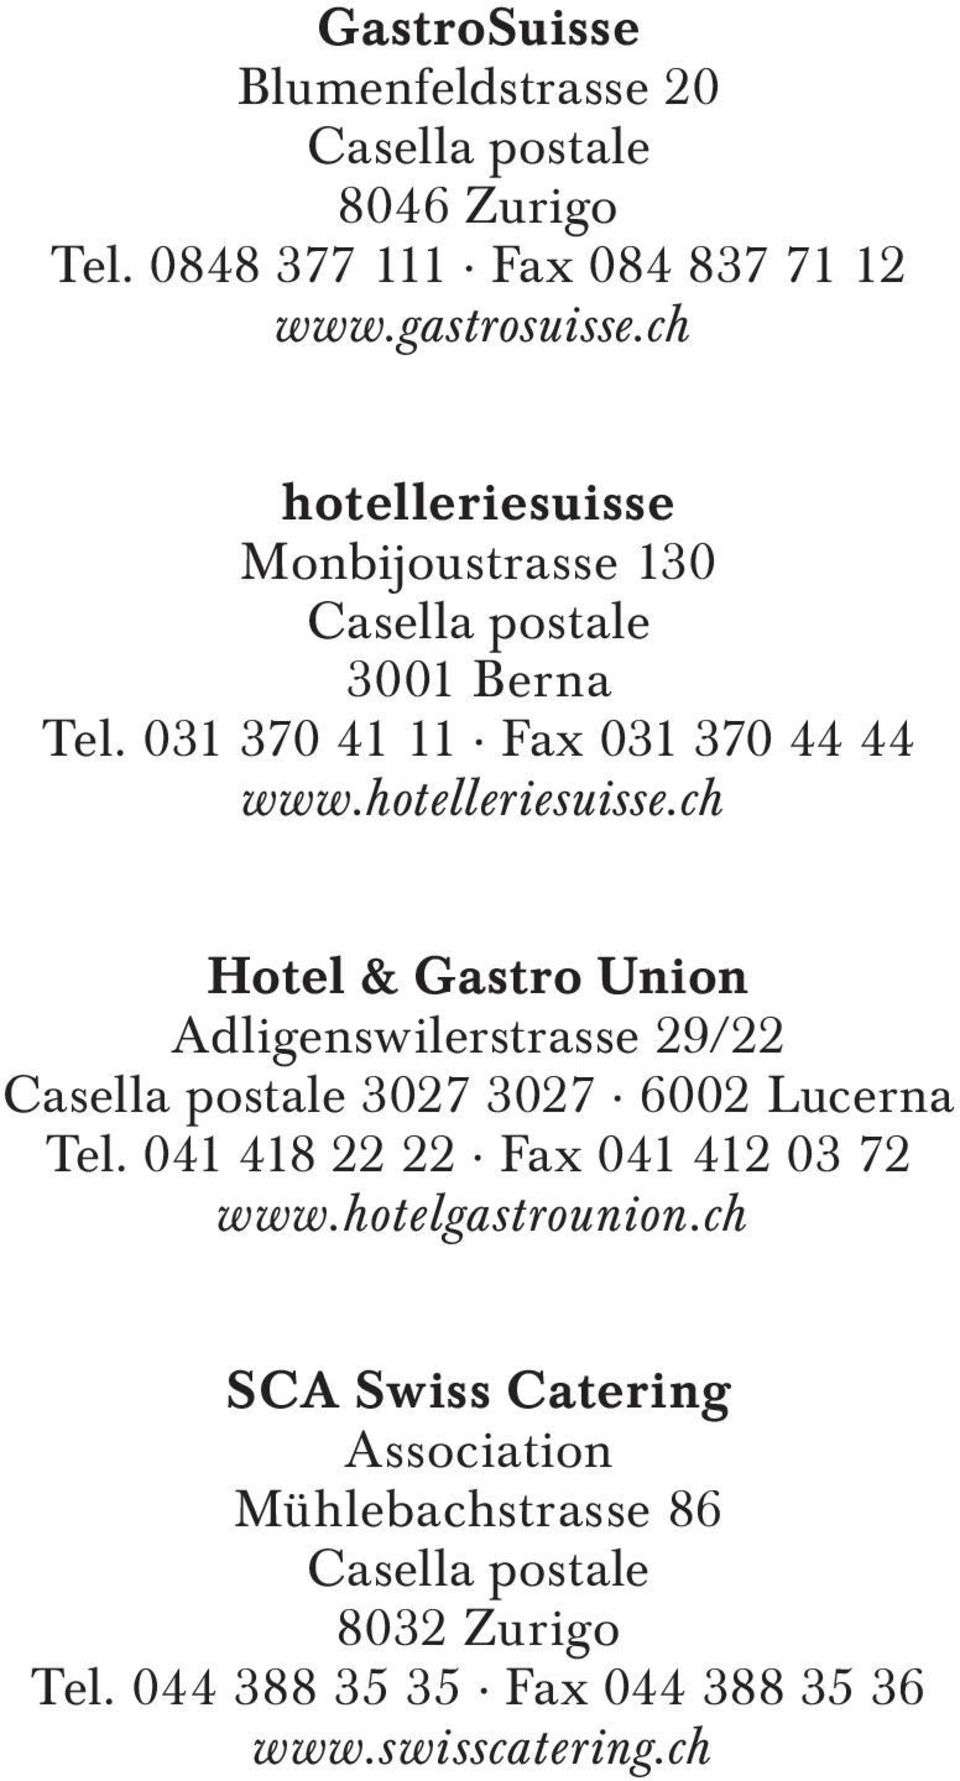 041 418 22 22 Fax 041 412 03 72 www.hotelgastrounion.